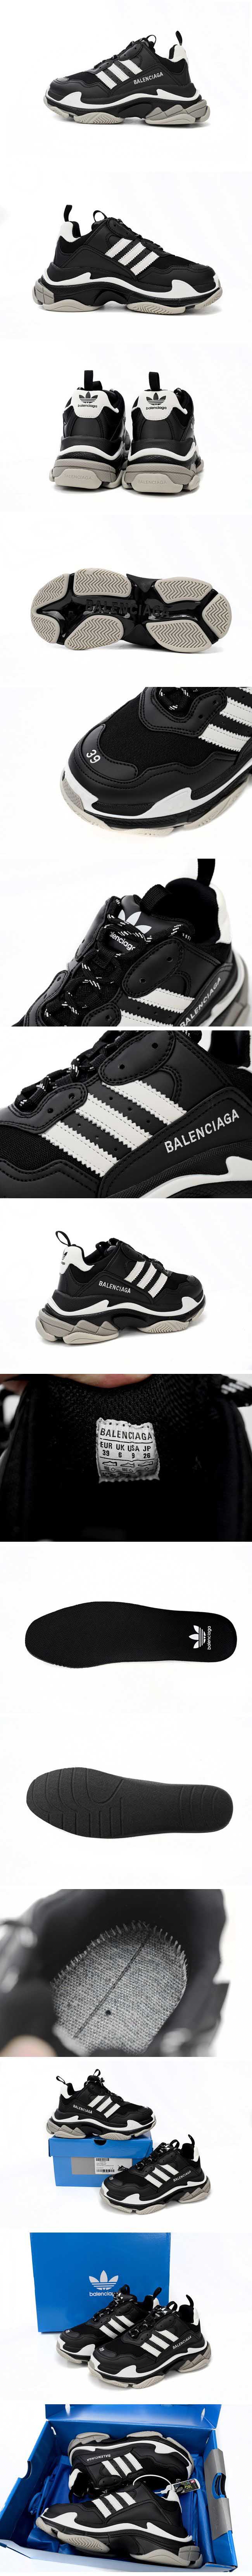 Adidas x Balenciaga Triple S Black/White アディダス x バレンシアガ トリプルエス ブラック/ホワイト